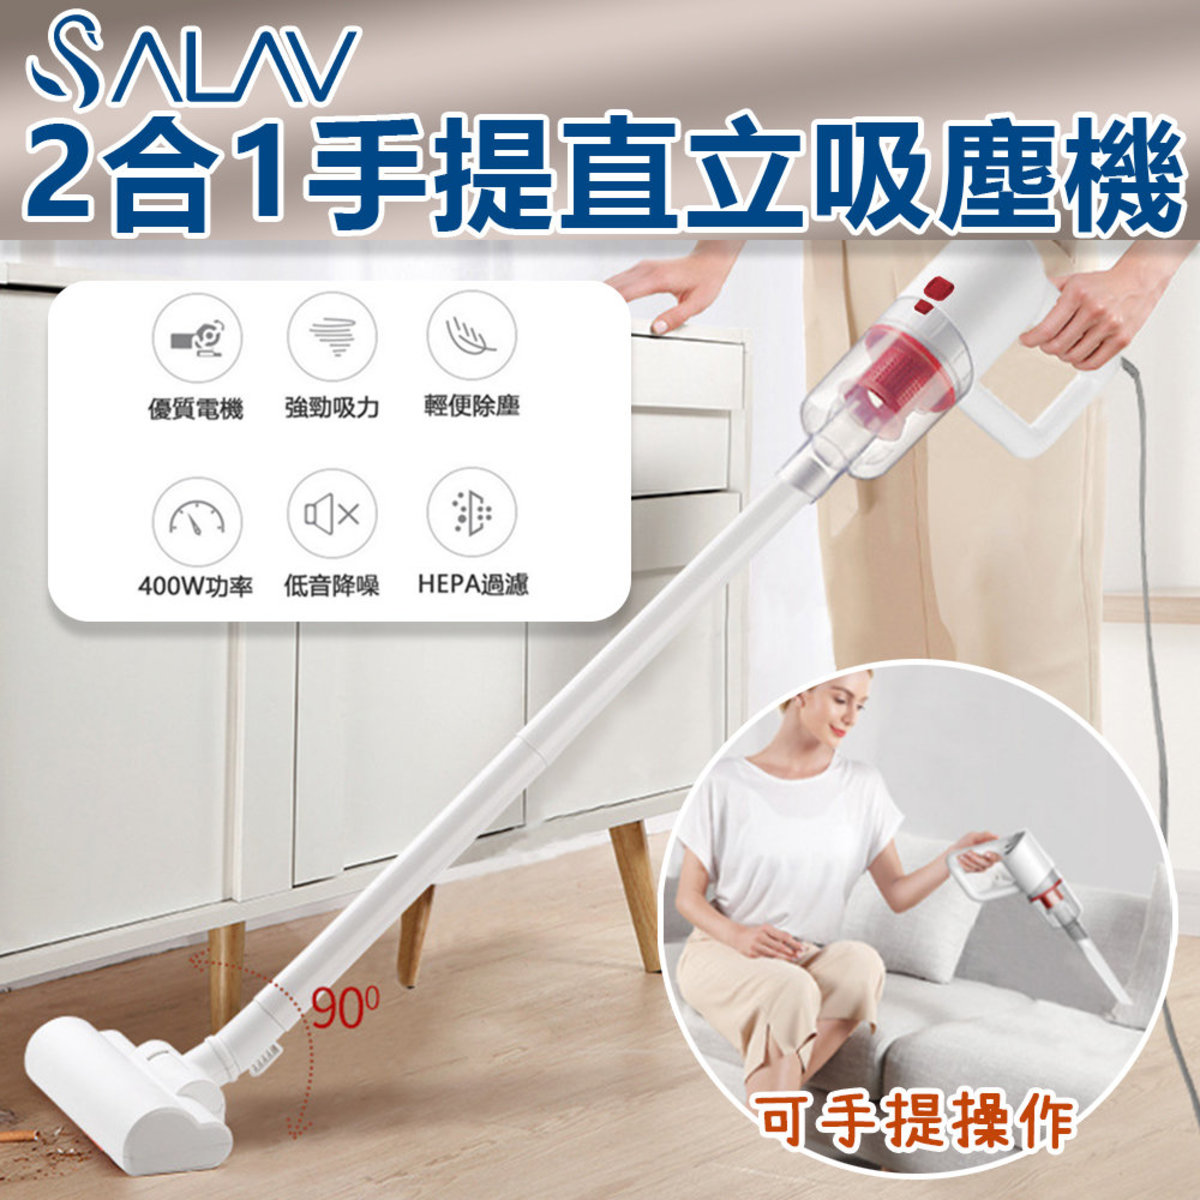 SALAV | 2合1手提直立吸塵機HV-05 | HKTVmall 香港最大網購平台